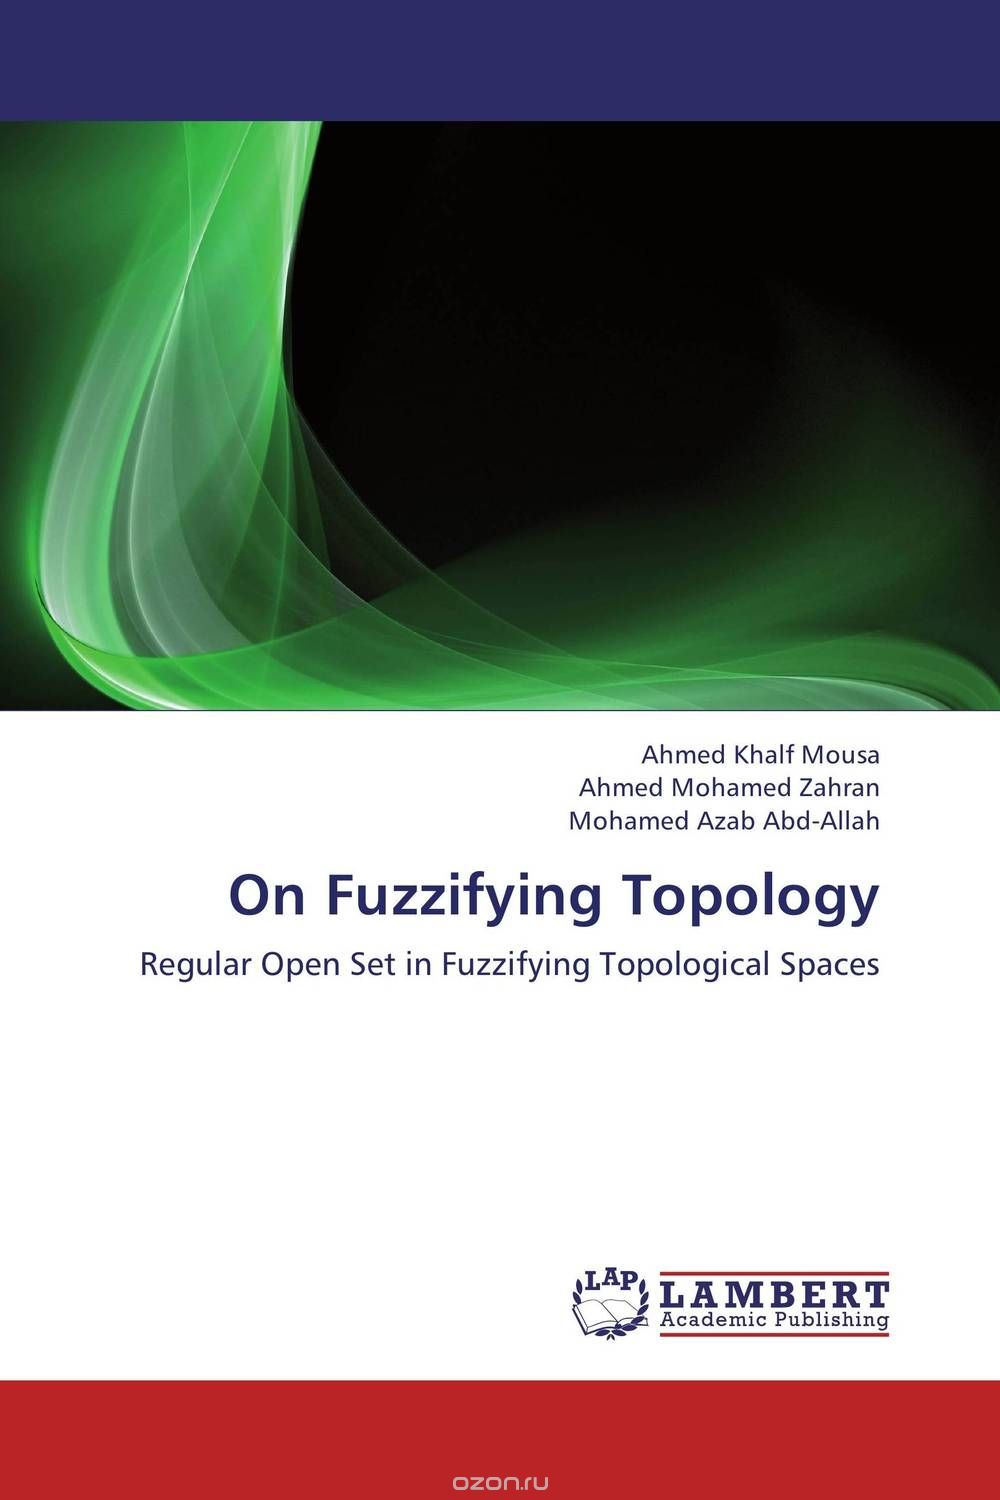 Скачать книгу "On Fuzzifying Topology"